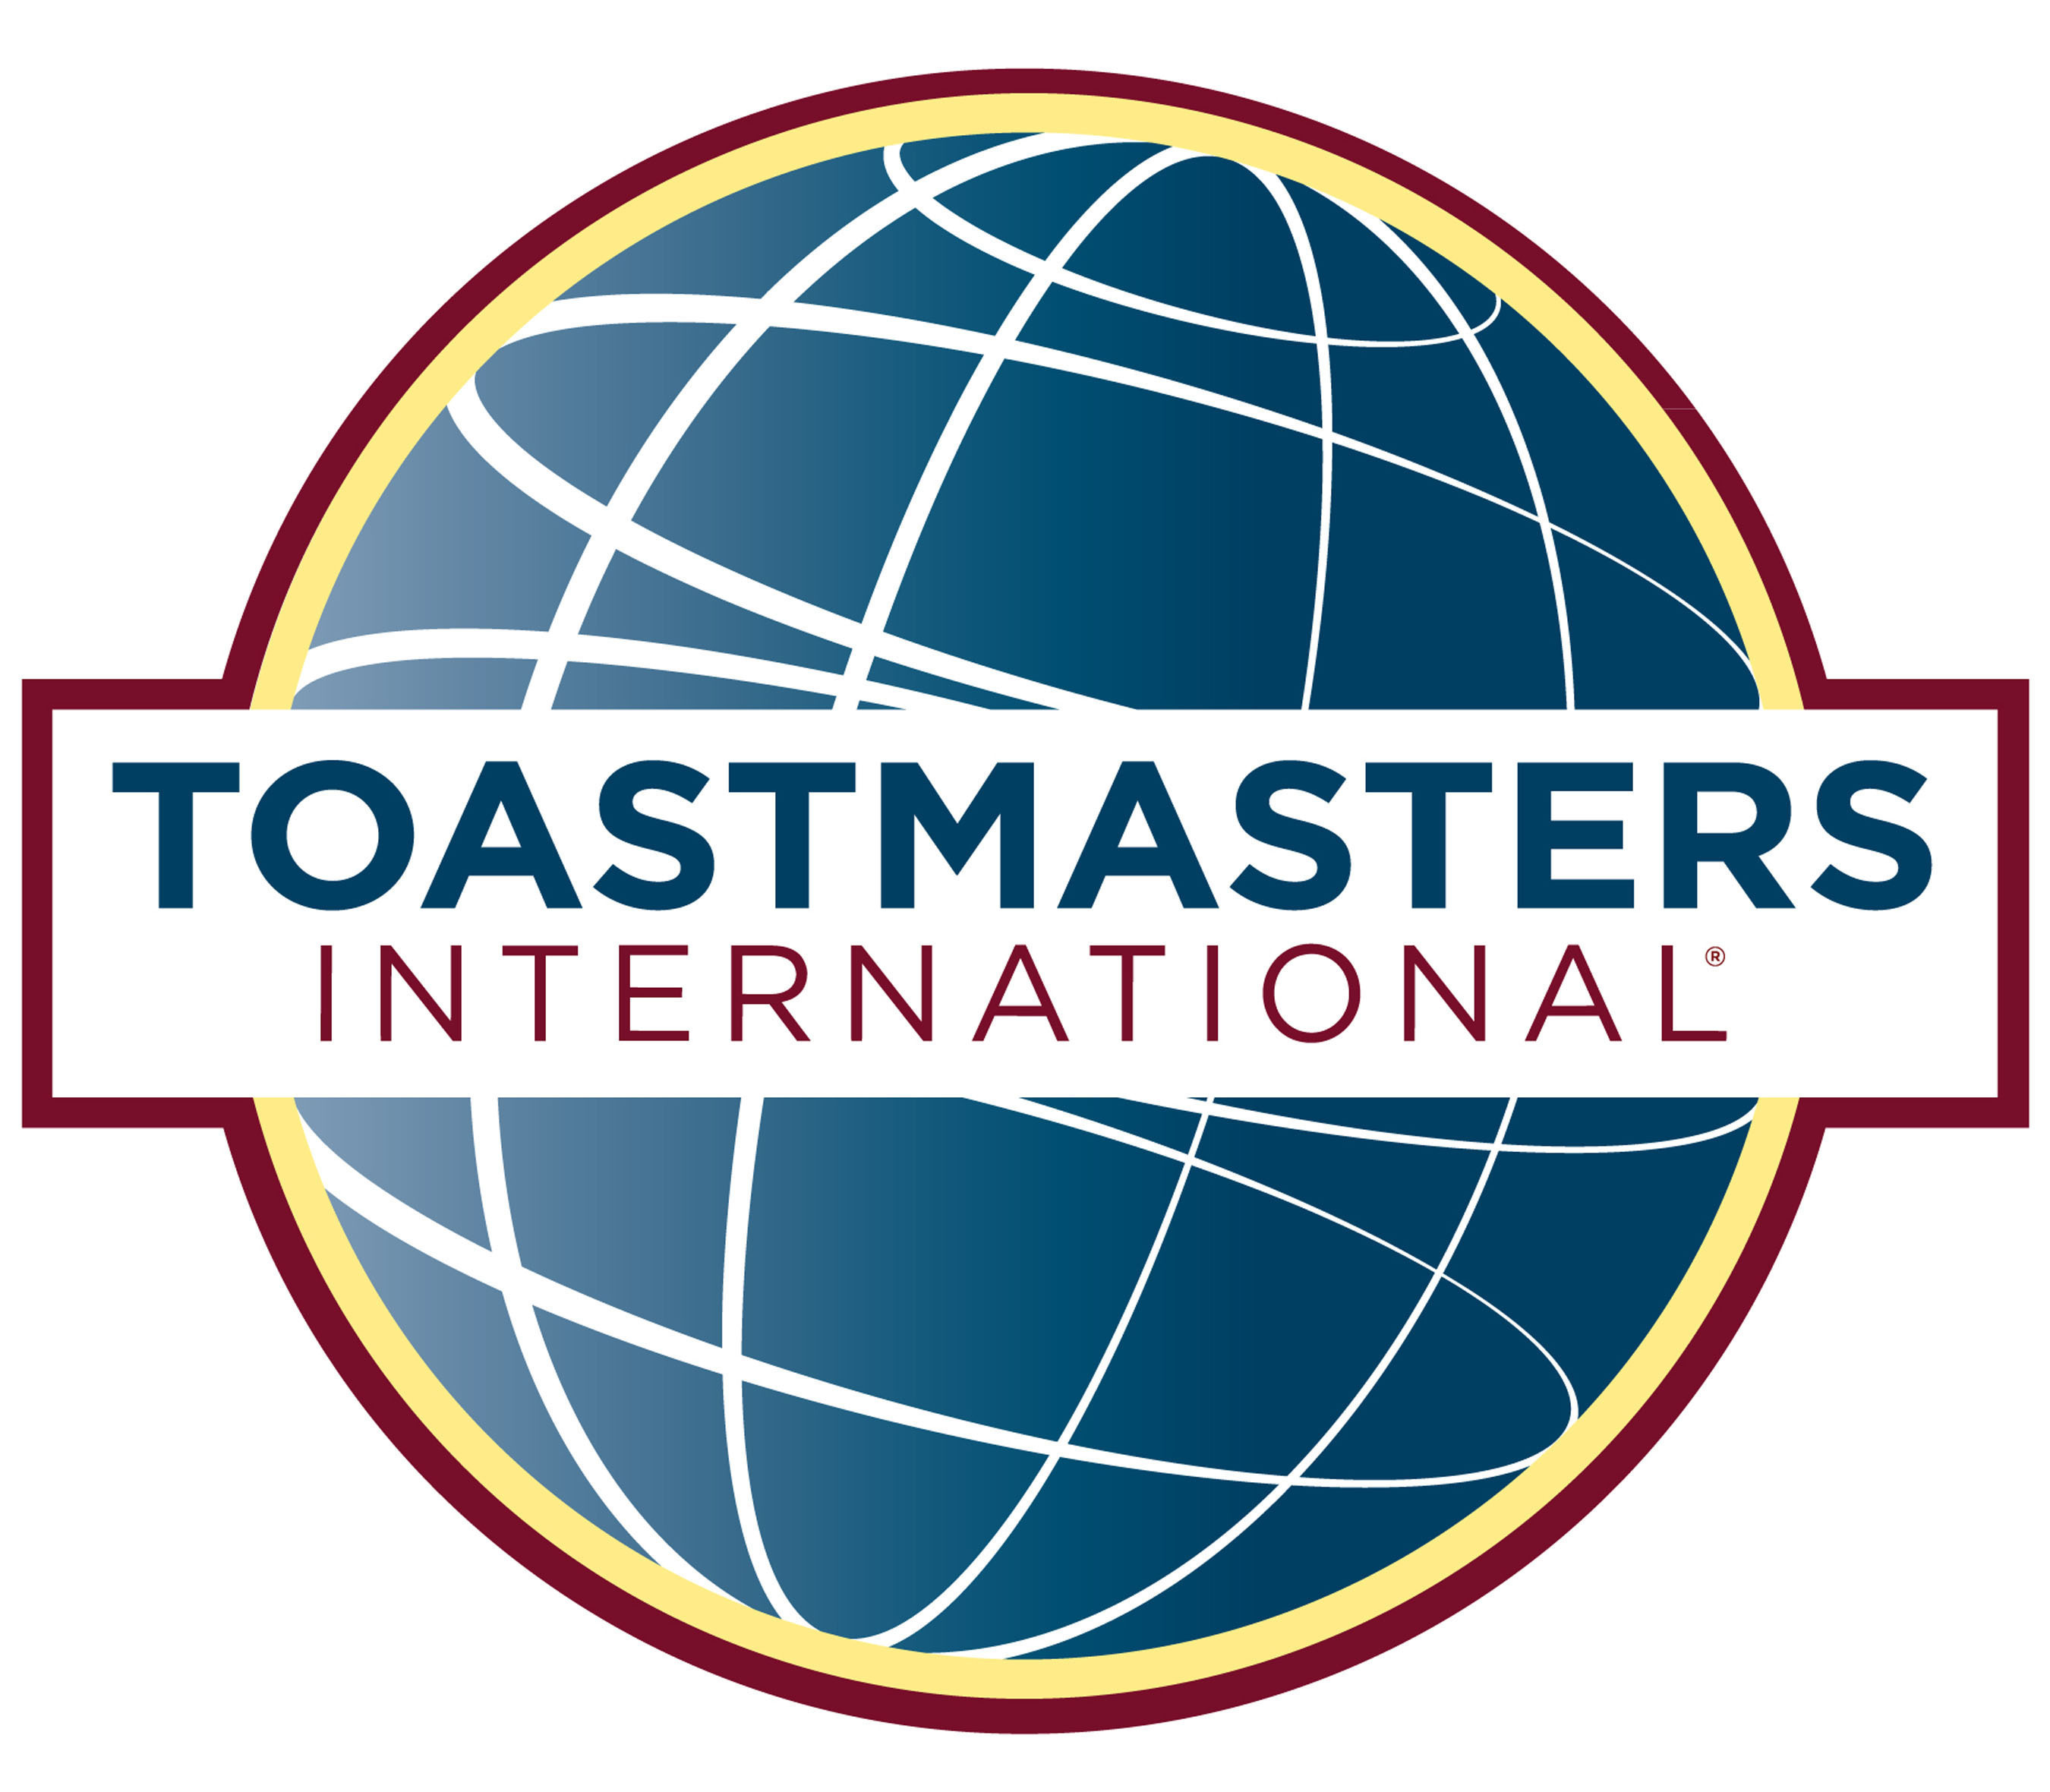 Toastmasters International LOGO. (PRNewsFoto/Toastmasters International) (PRNewsFoto/)